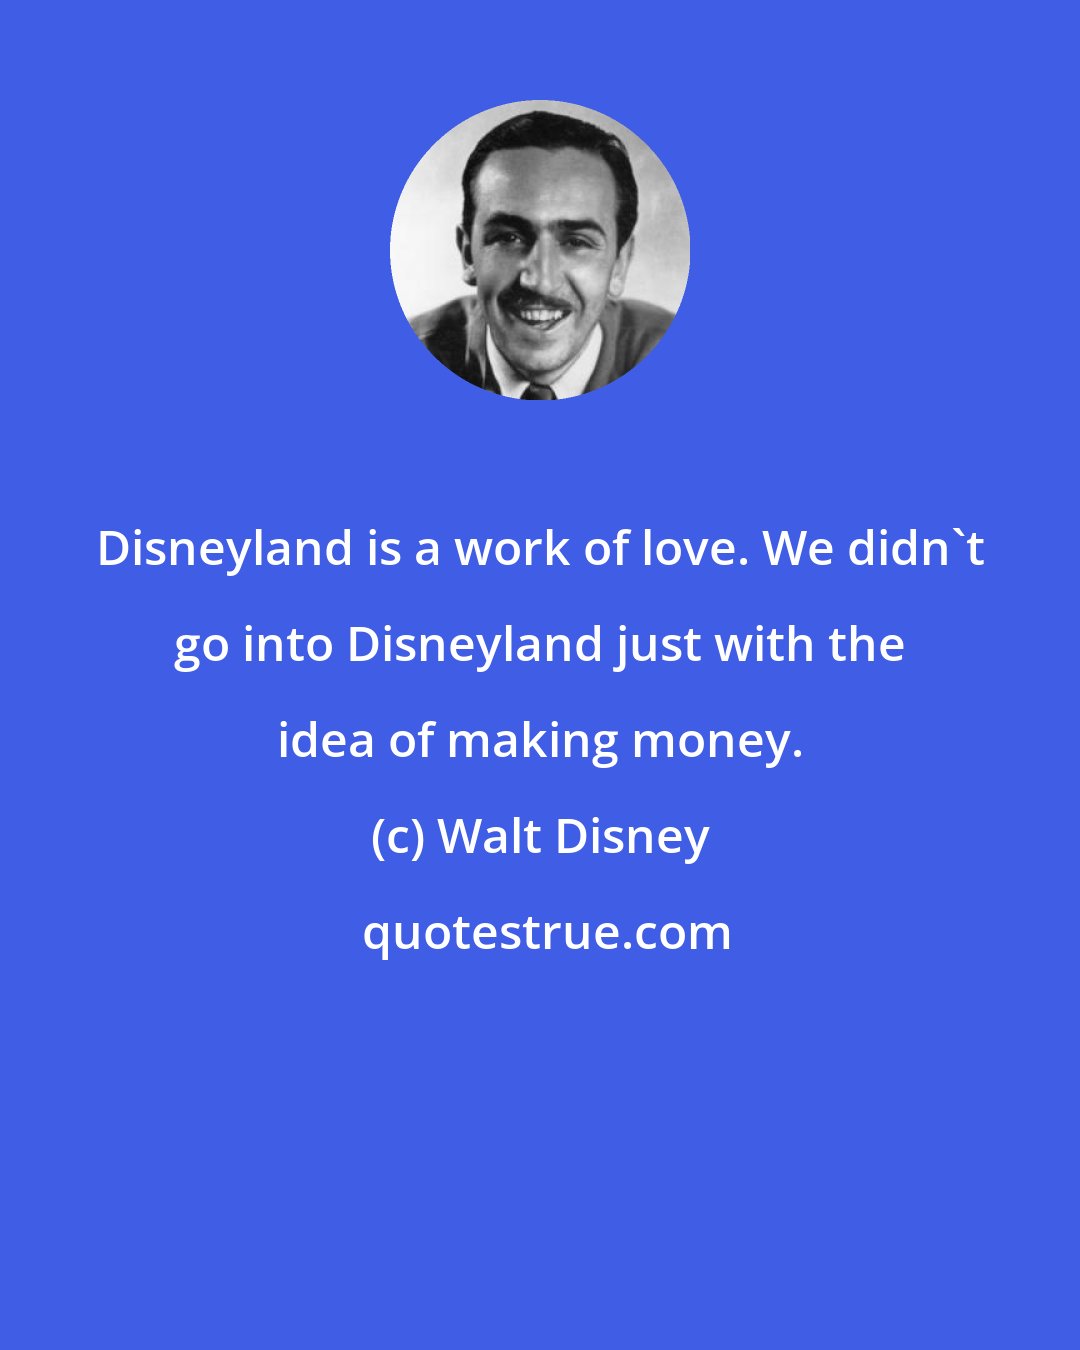 Walt Disney: Disneyland is a work of love. We didn't go into Disneyland just with the idea of making money.